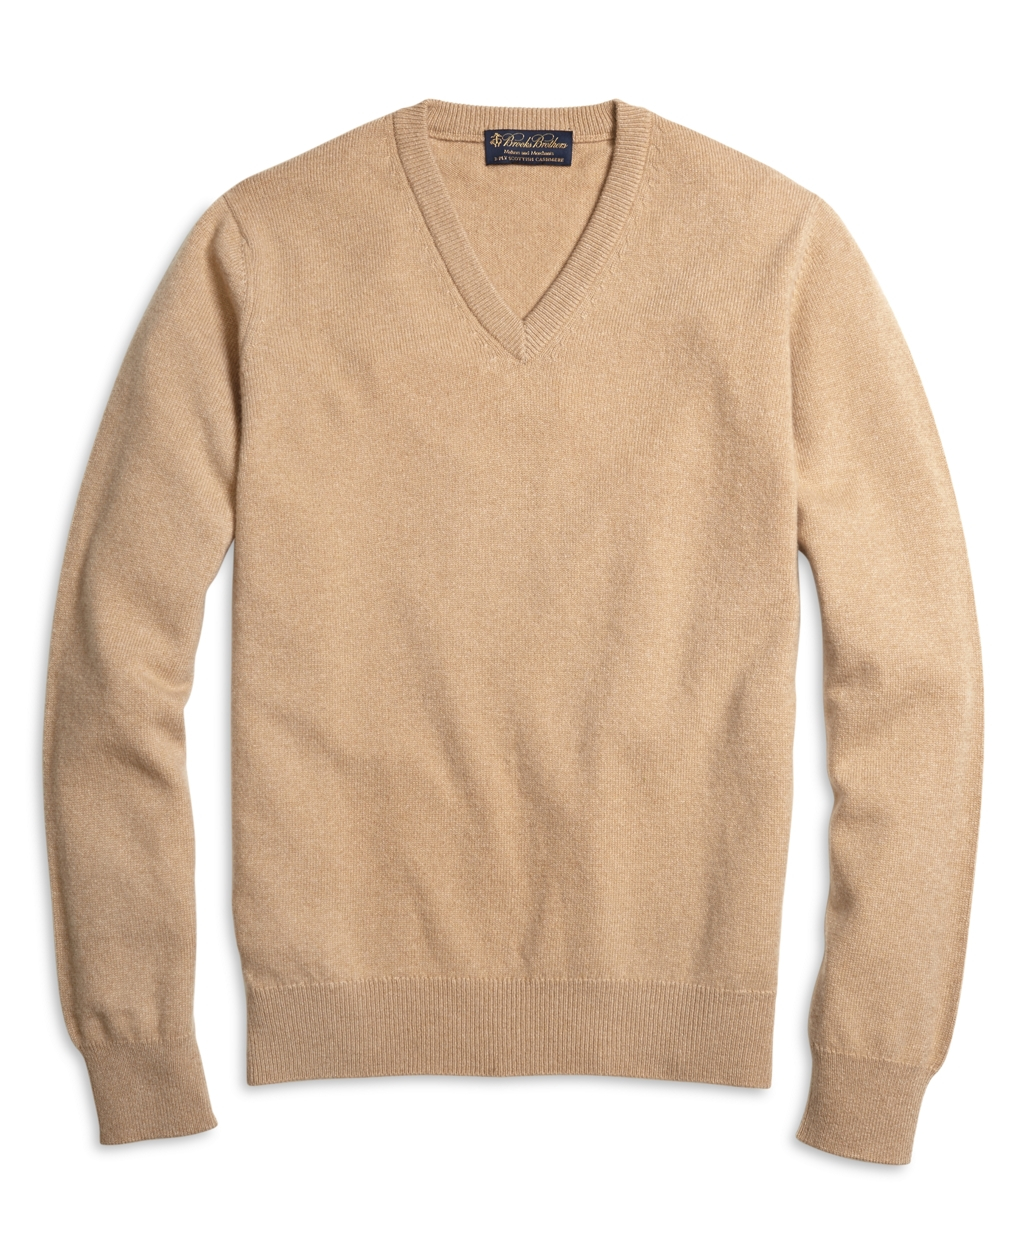 Brooks Brothers Camel Cashmere V Neck Sweater Beige Product 0 519623425 Normal 